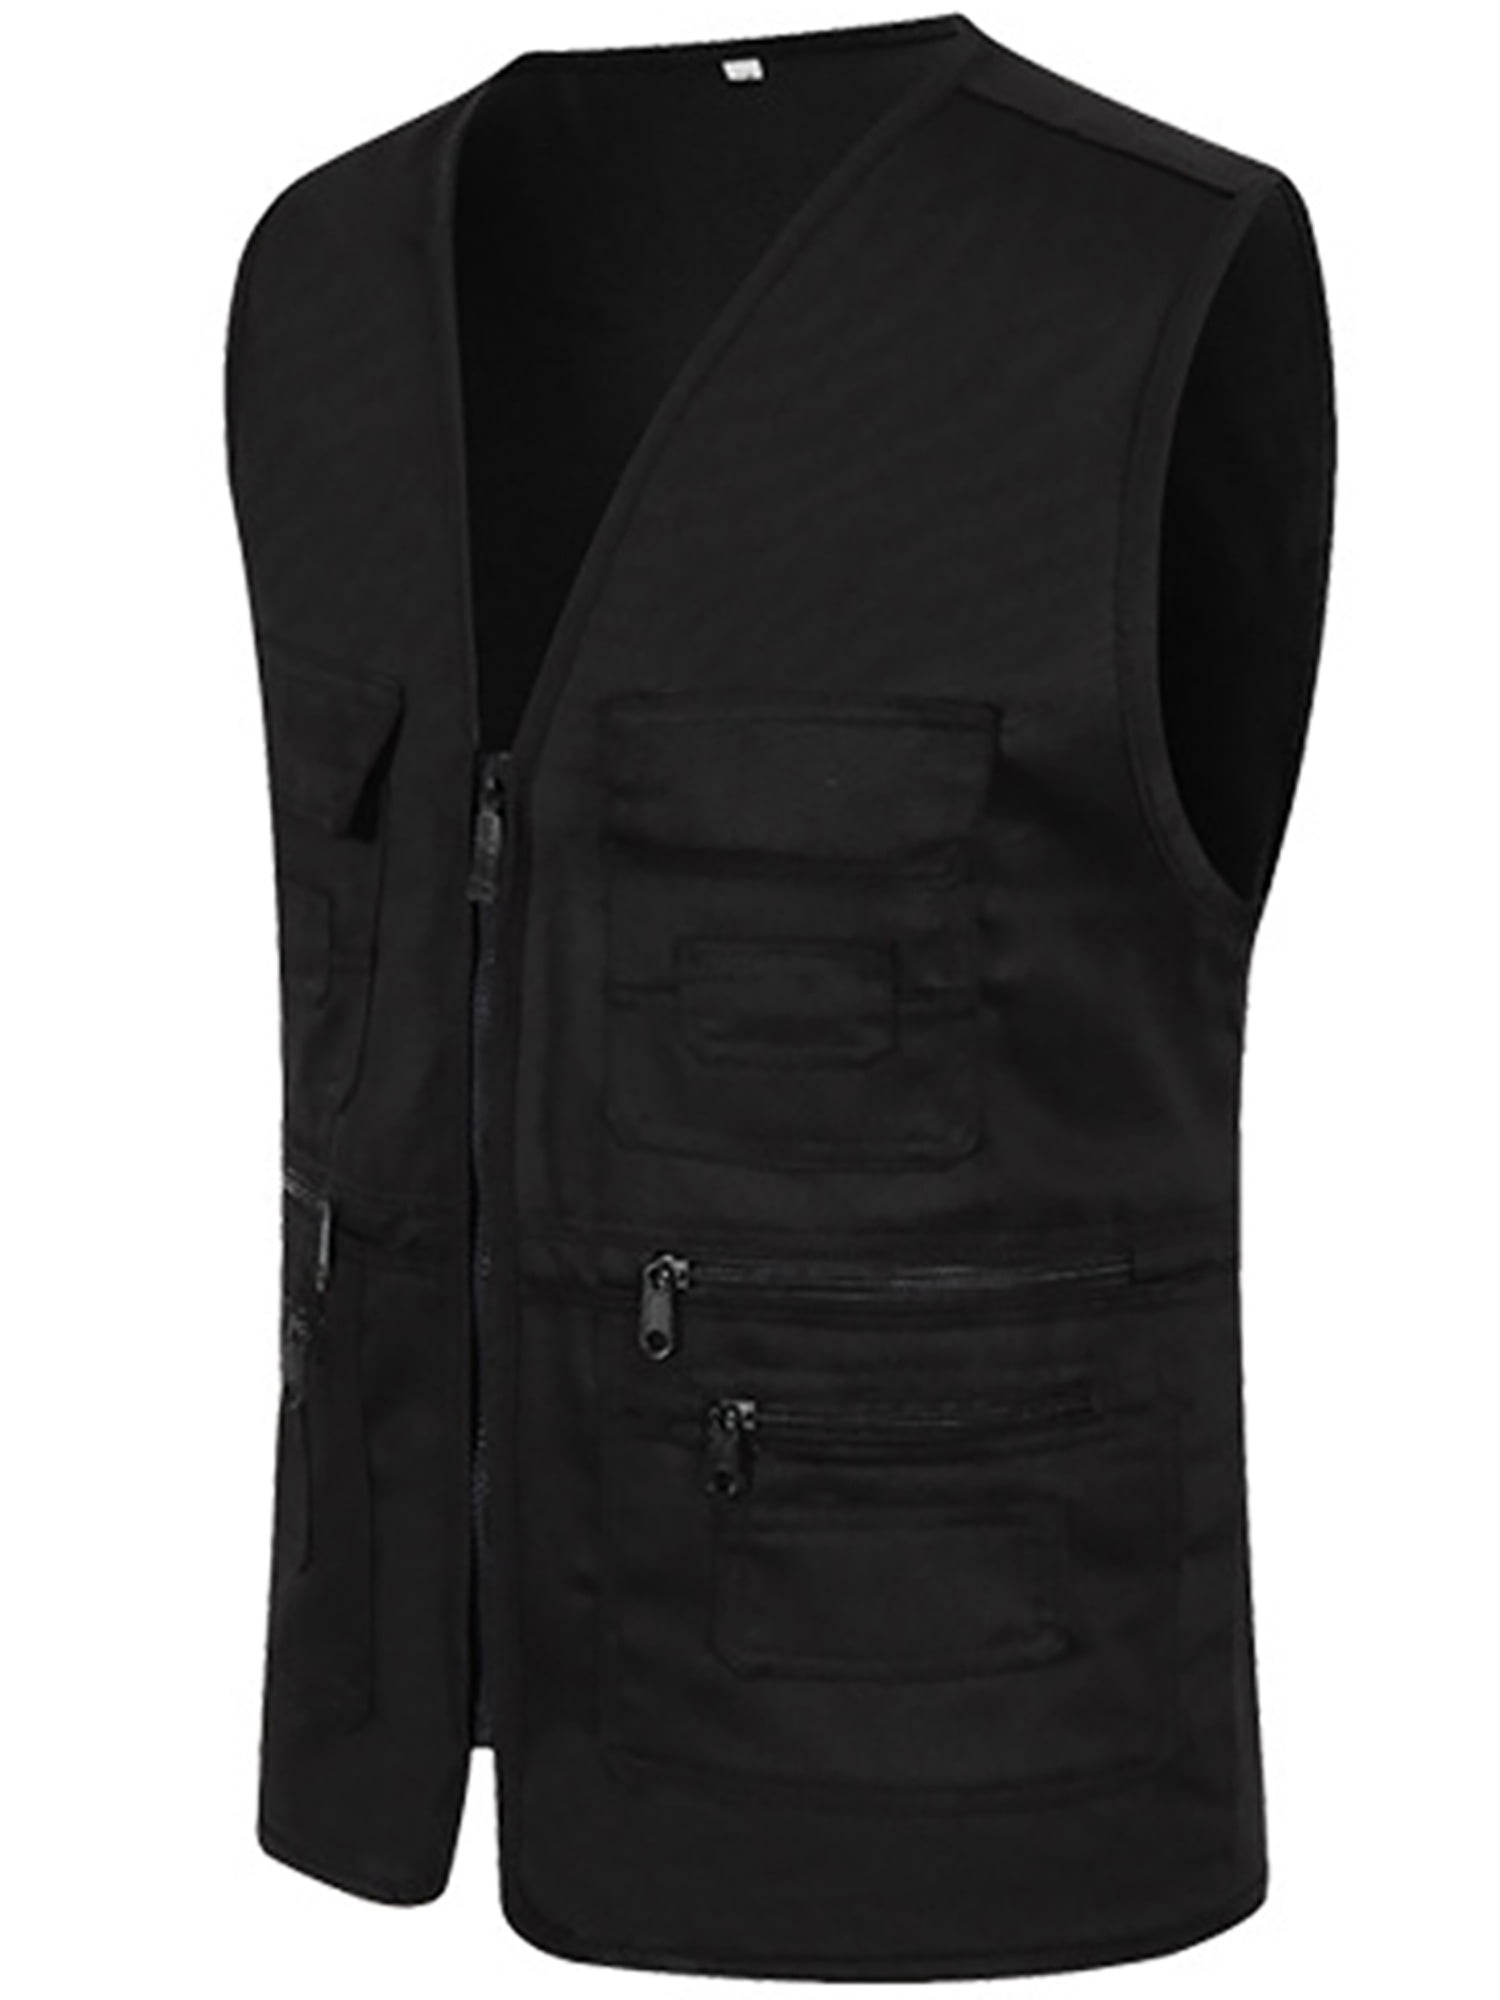 Mens Outdoor Reversible Fishing Vest Casual Gilet Photography Waistcoat Sleeveless Jacket Coat with Multi Pockets 